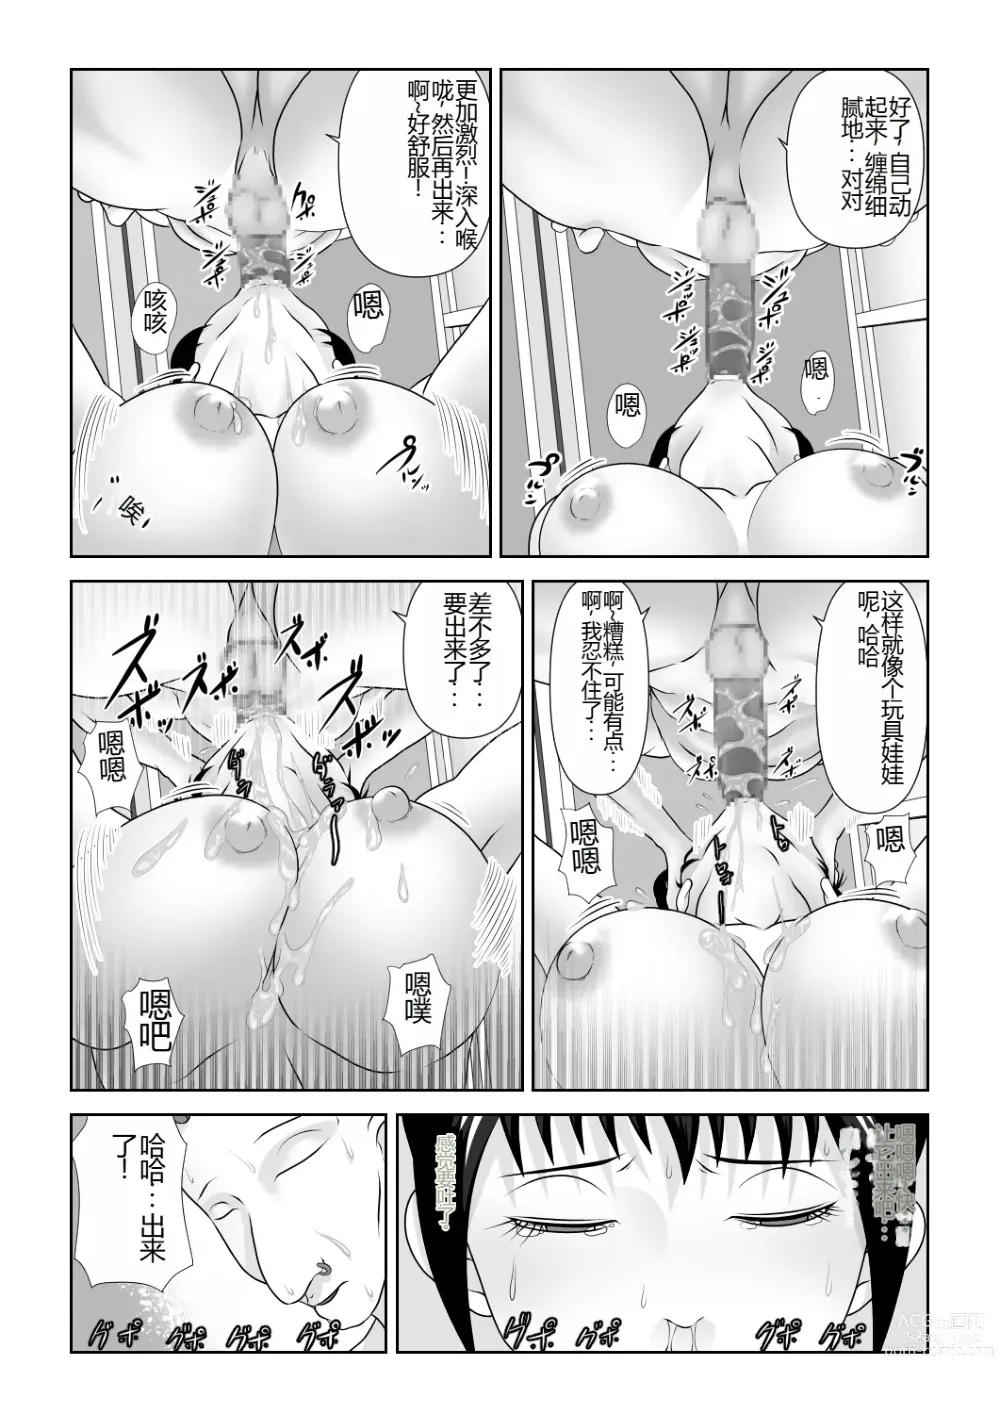 Page 66 of doujinshi Strange School